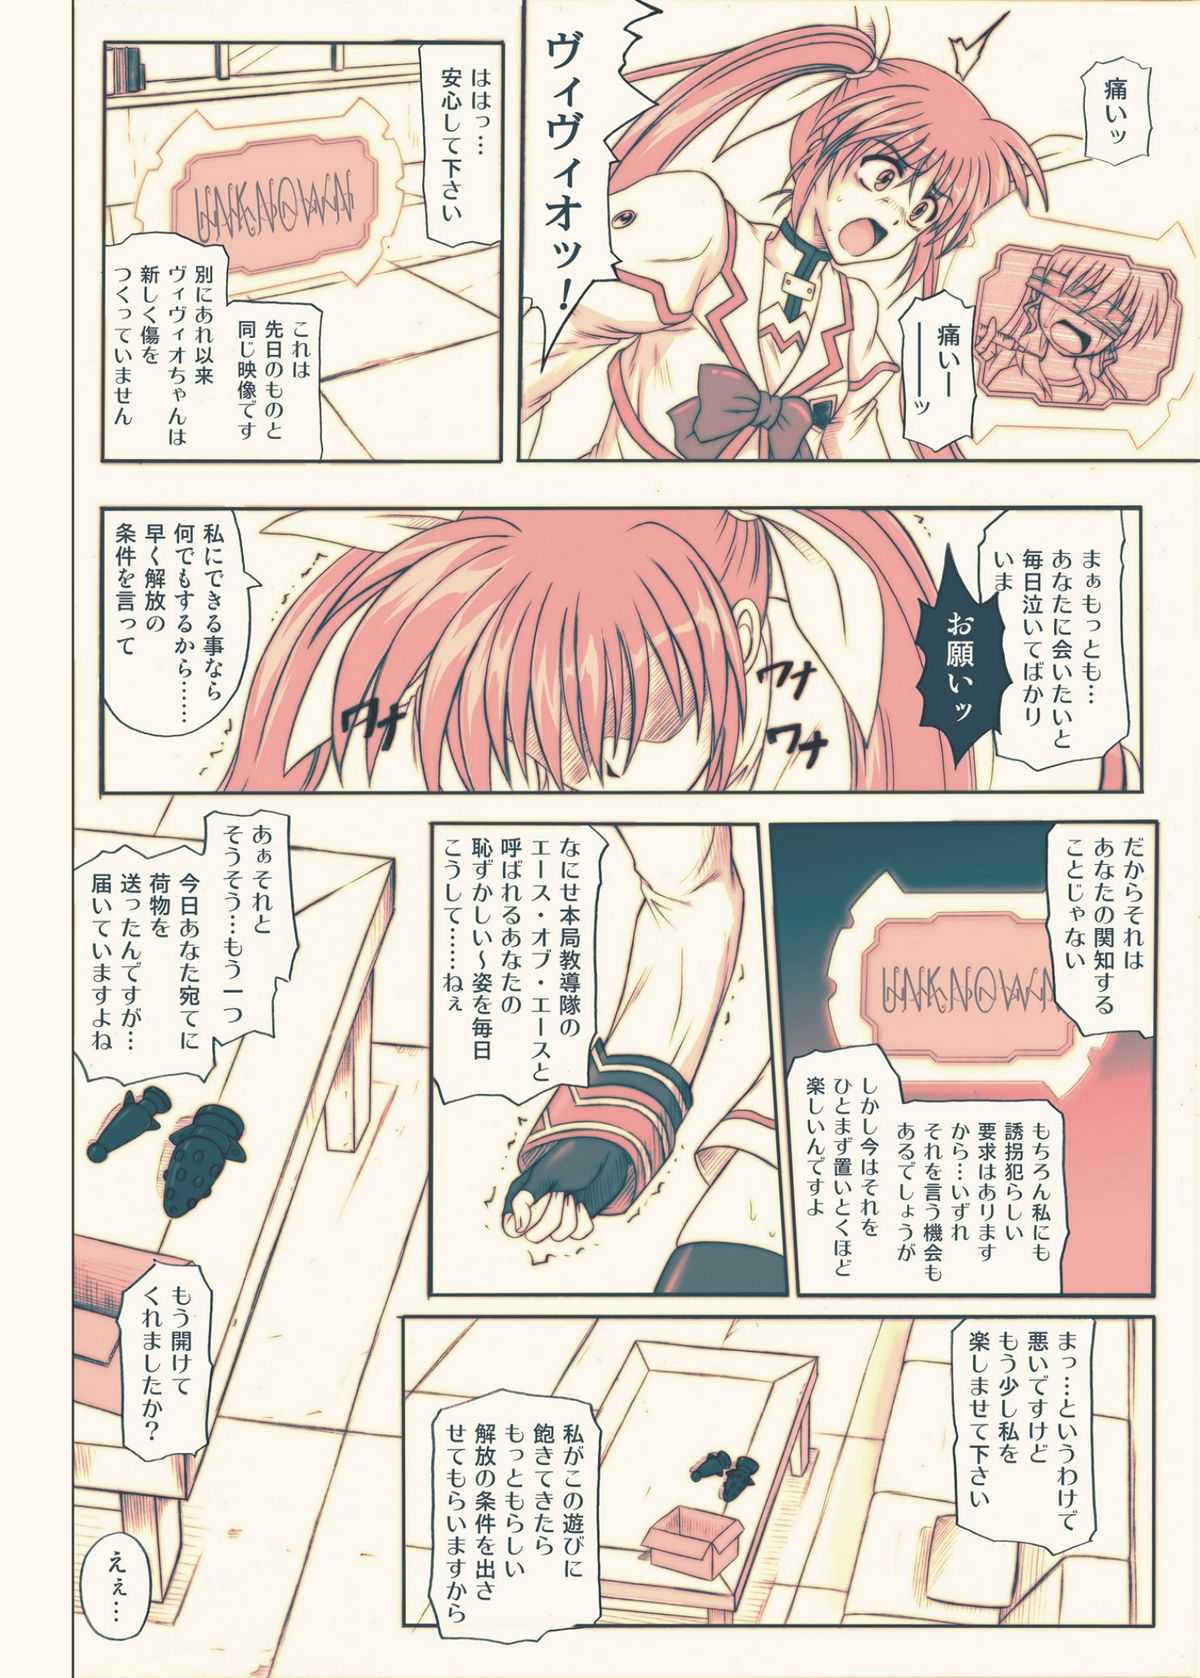 [CYCLONE (Izumi Kazuya)] 840 -Color Classic Situation Note Extention- (Mahou Shoujo Lyrical Nanoha) [Digital] [Colored] [サイクロン (和泉和也)] 840 -Color Classic Situation Note Extention- (魔法少女リリカルなのは) [DL版]